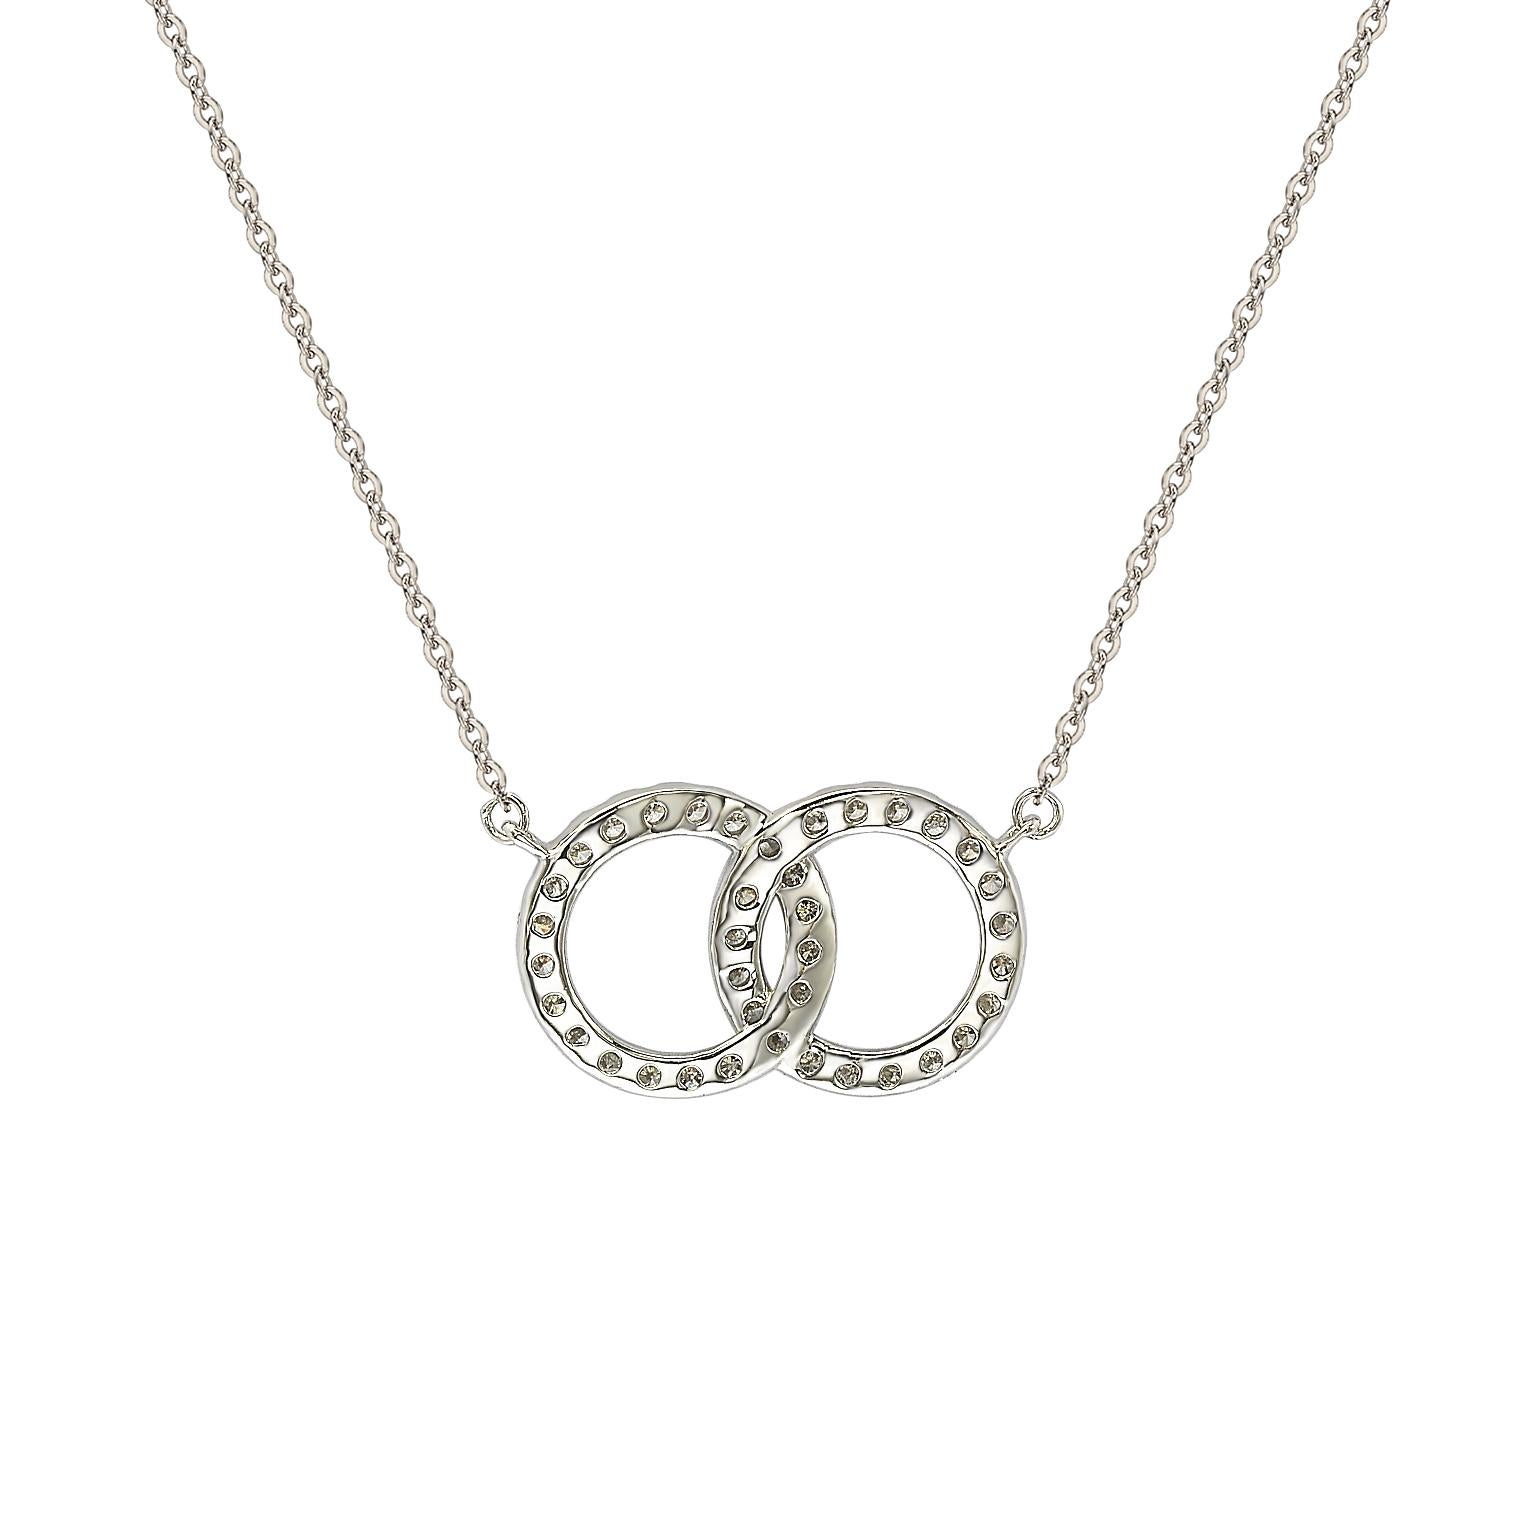 This elegant Suzy Levian solitaire interlocking circle necklace displays round-cut diamonds on 14 karat white gold setting. This gorgeous interlocking circle necklace has 38, 1.4 mm, white round cut diamonds totaling .48 cttw. This interlocking